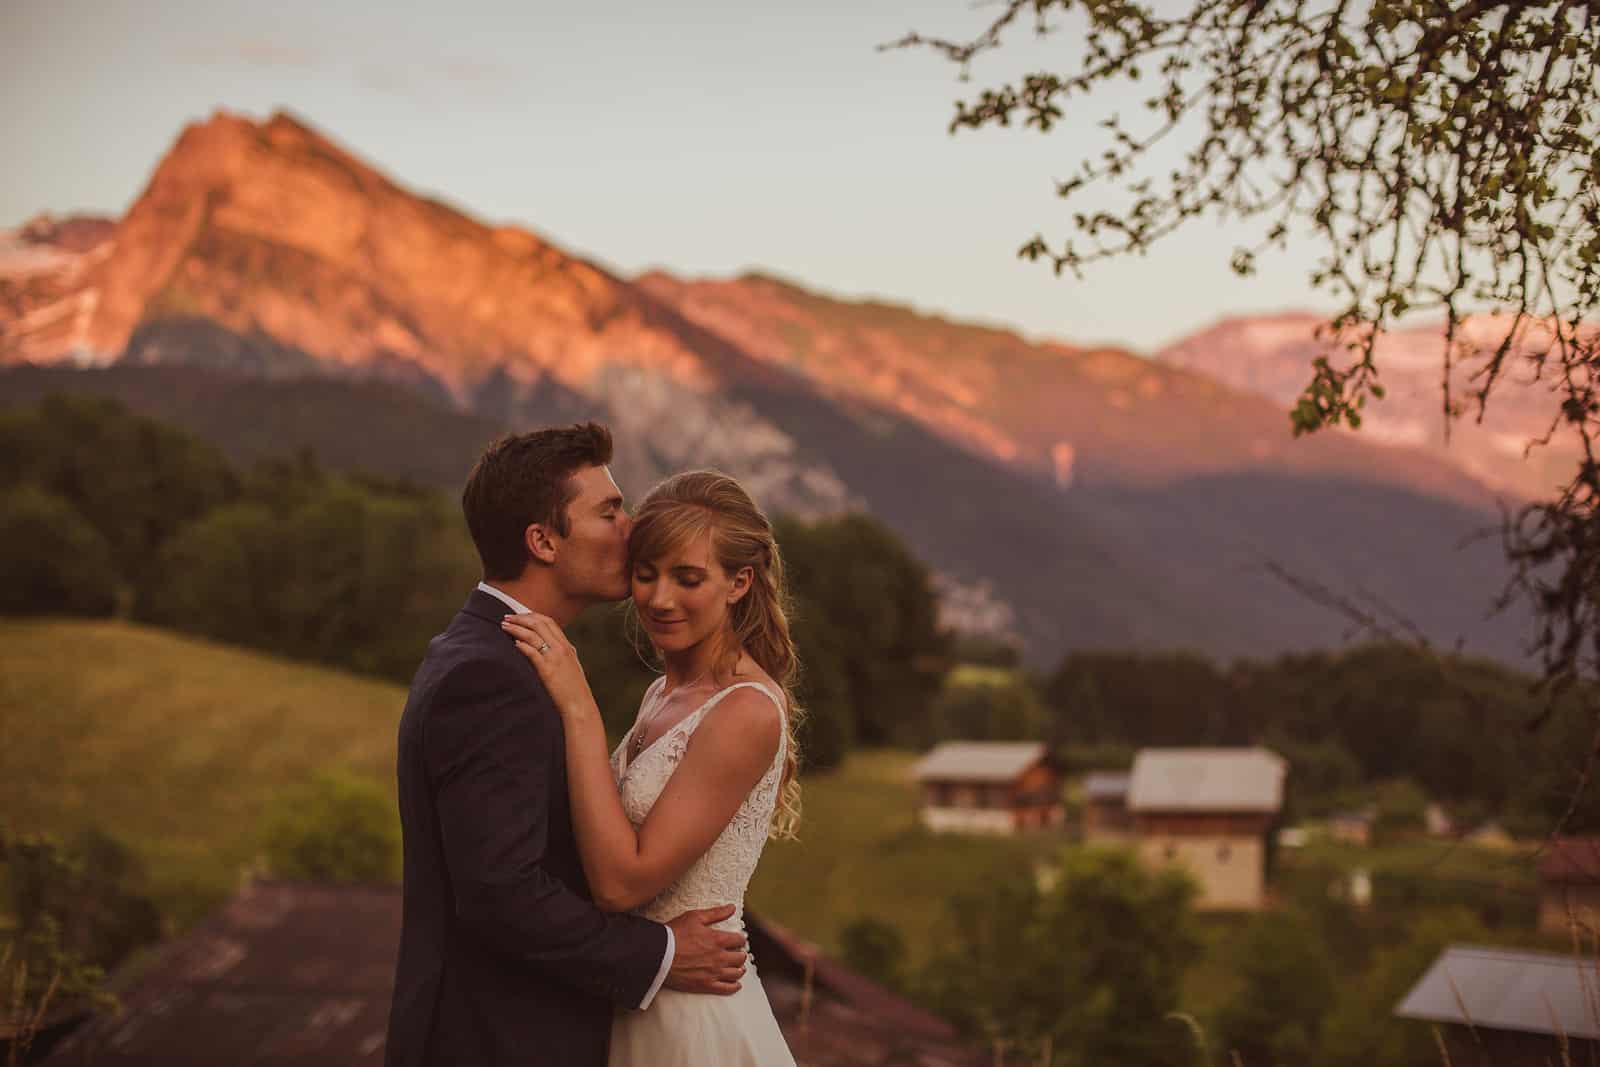 Kate + Zac, Samoëns, The French Alps Wedding | Wedding Photographer France